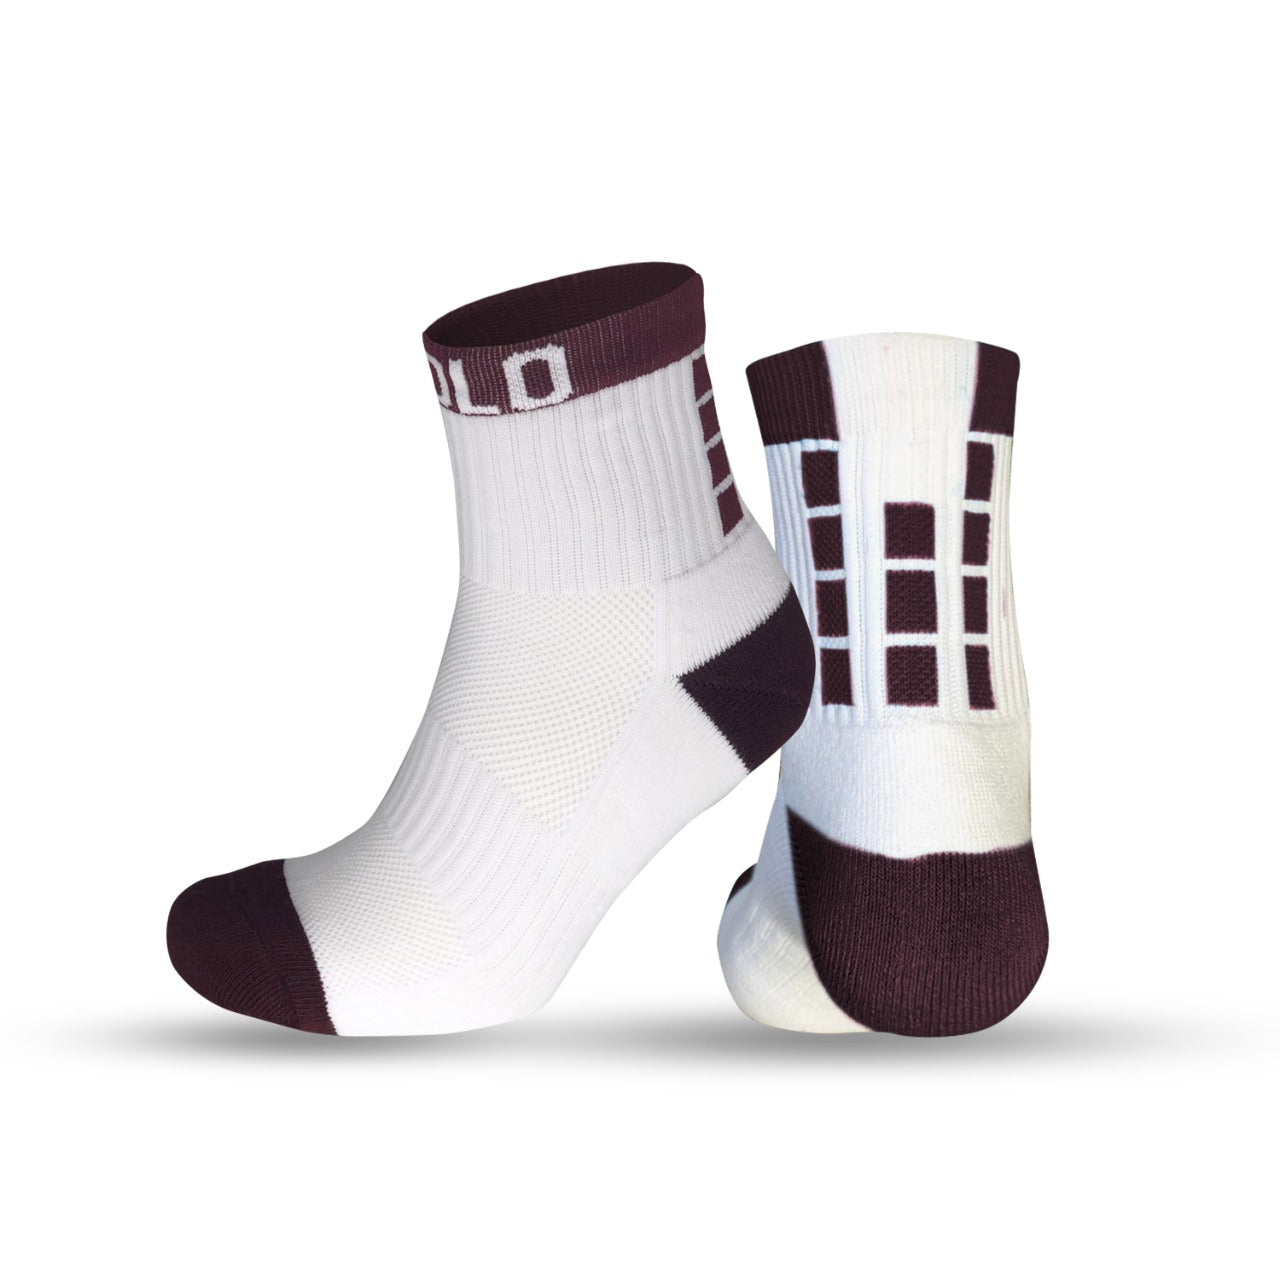 Lowrise Cushioned Ankle Socks - Maroon & White